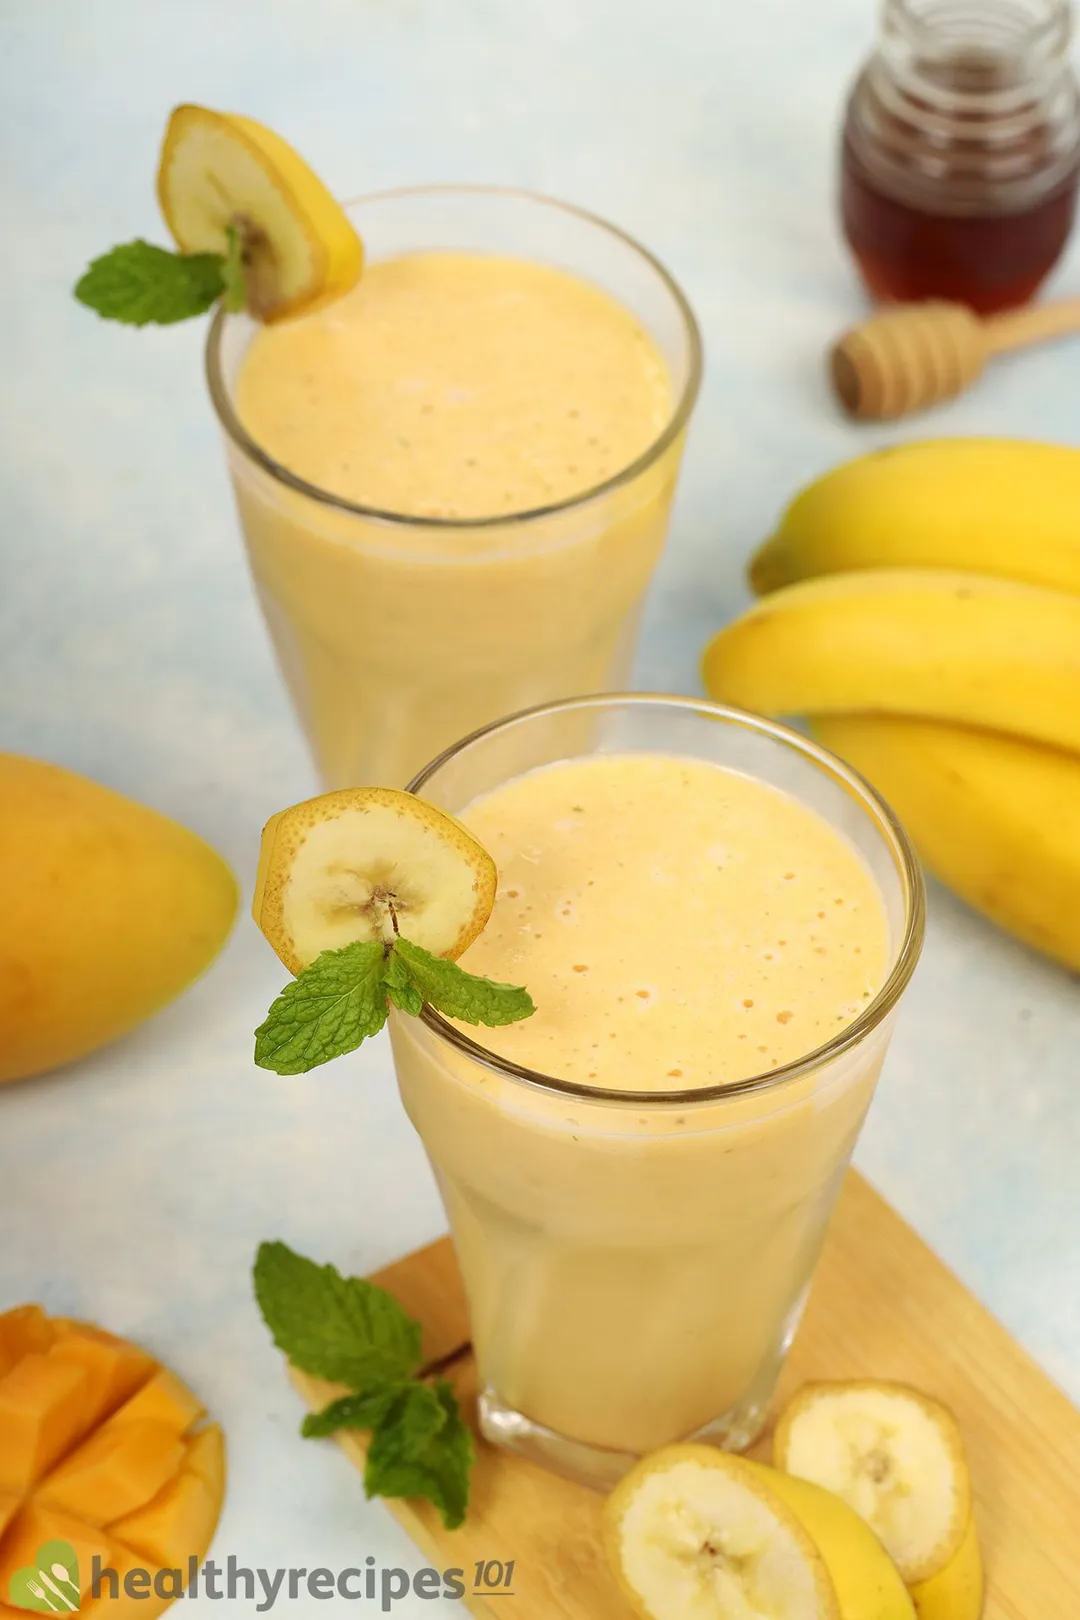 Two glasses of Mango Banana Smoothie placed near mangoes, bananas, and a small jar of honey.